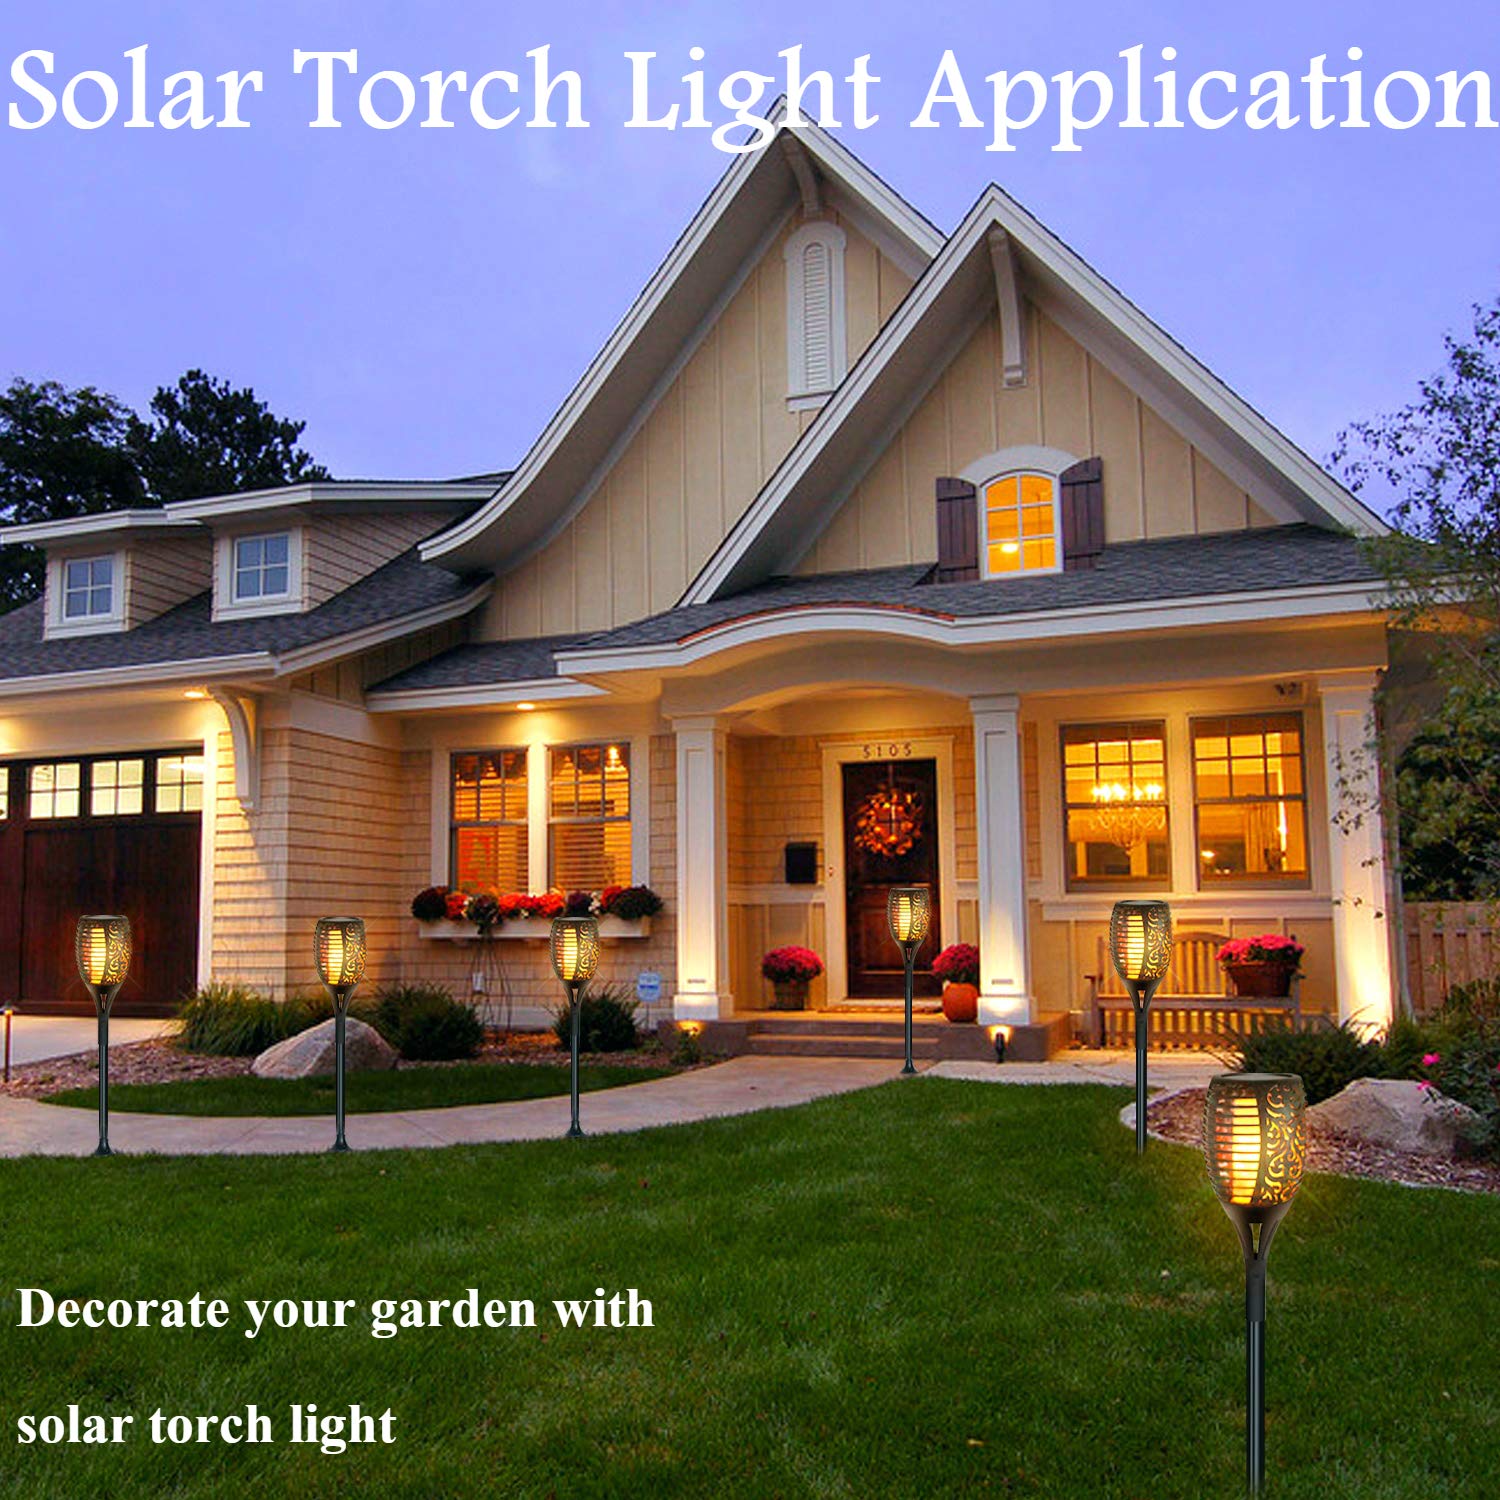 33LEDs-56CM-Height-Waterproof-Solar-Fire-Torch-Light-Flickering-Flame-Lamp-Outdoor-Landscape-Garden--1656768-1